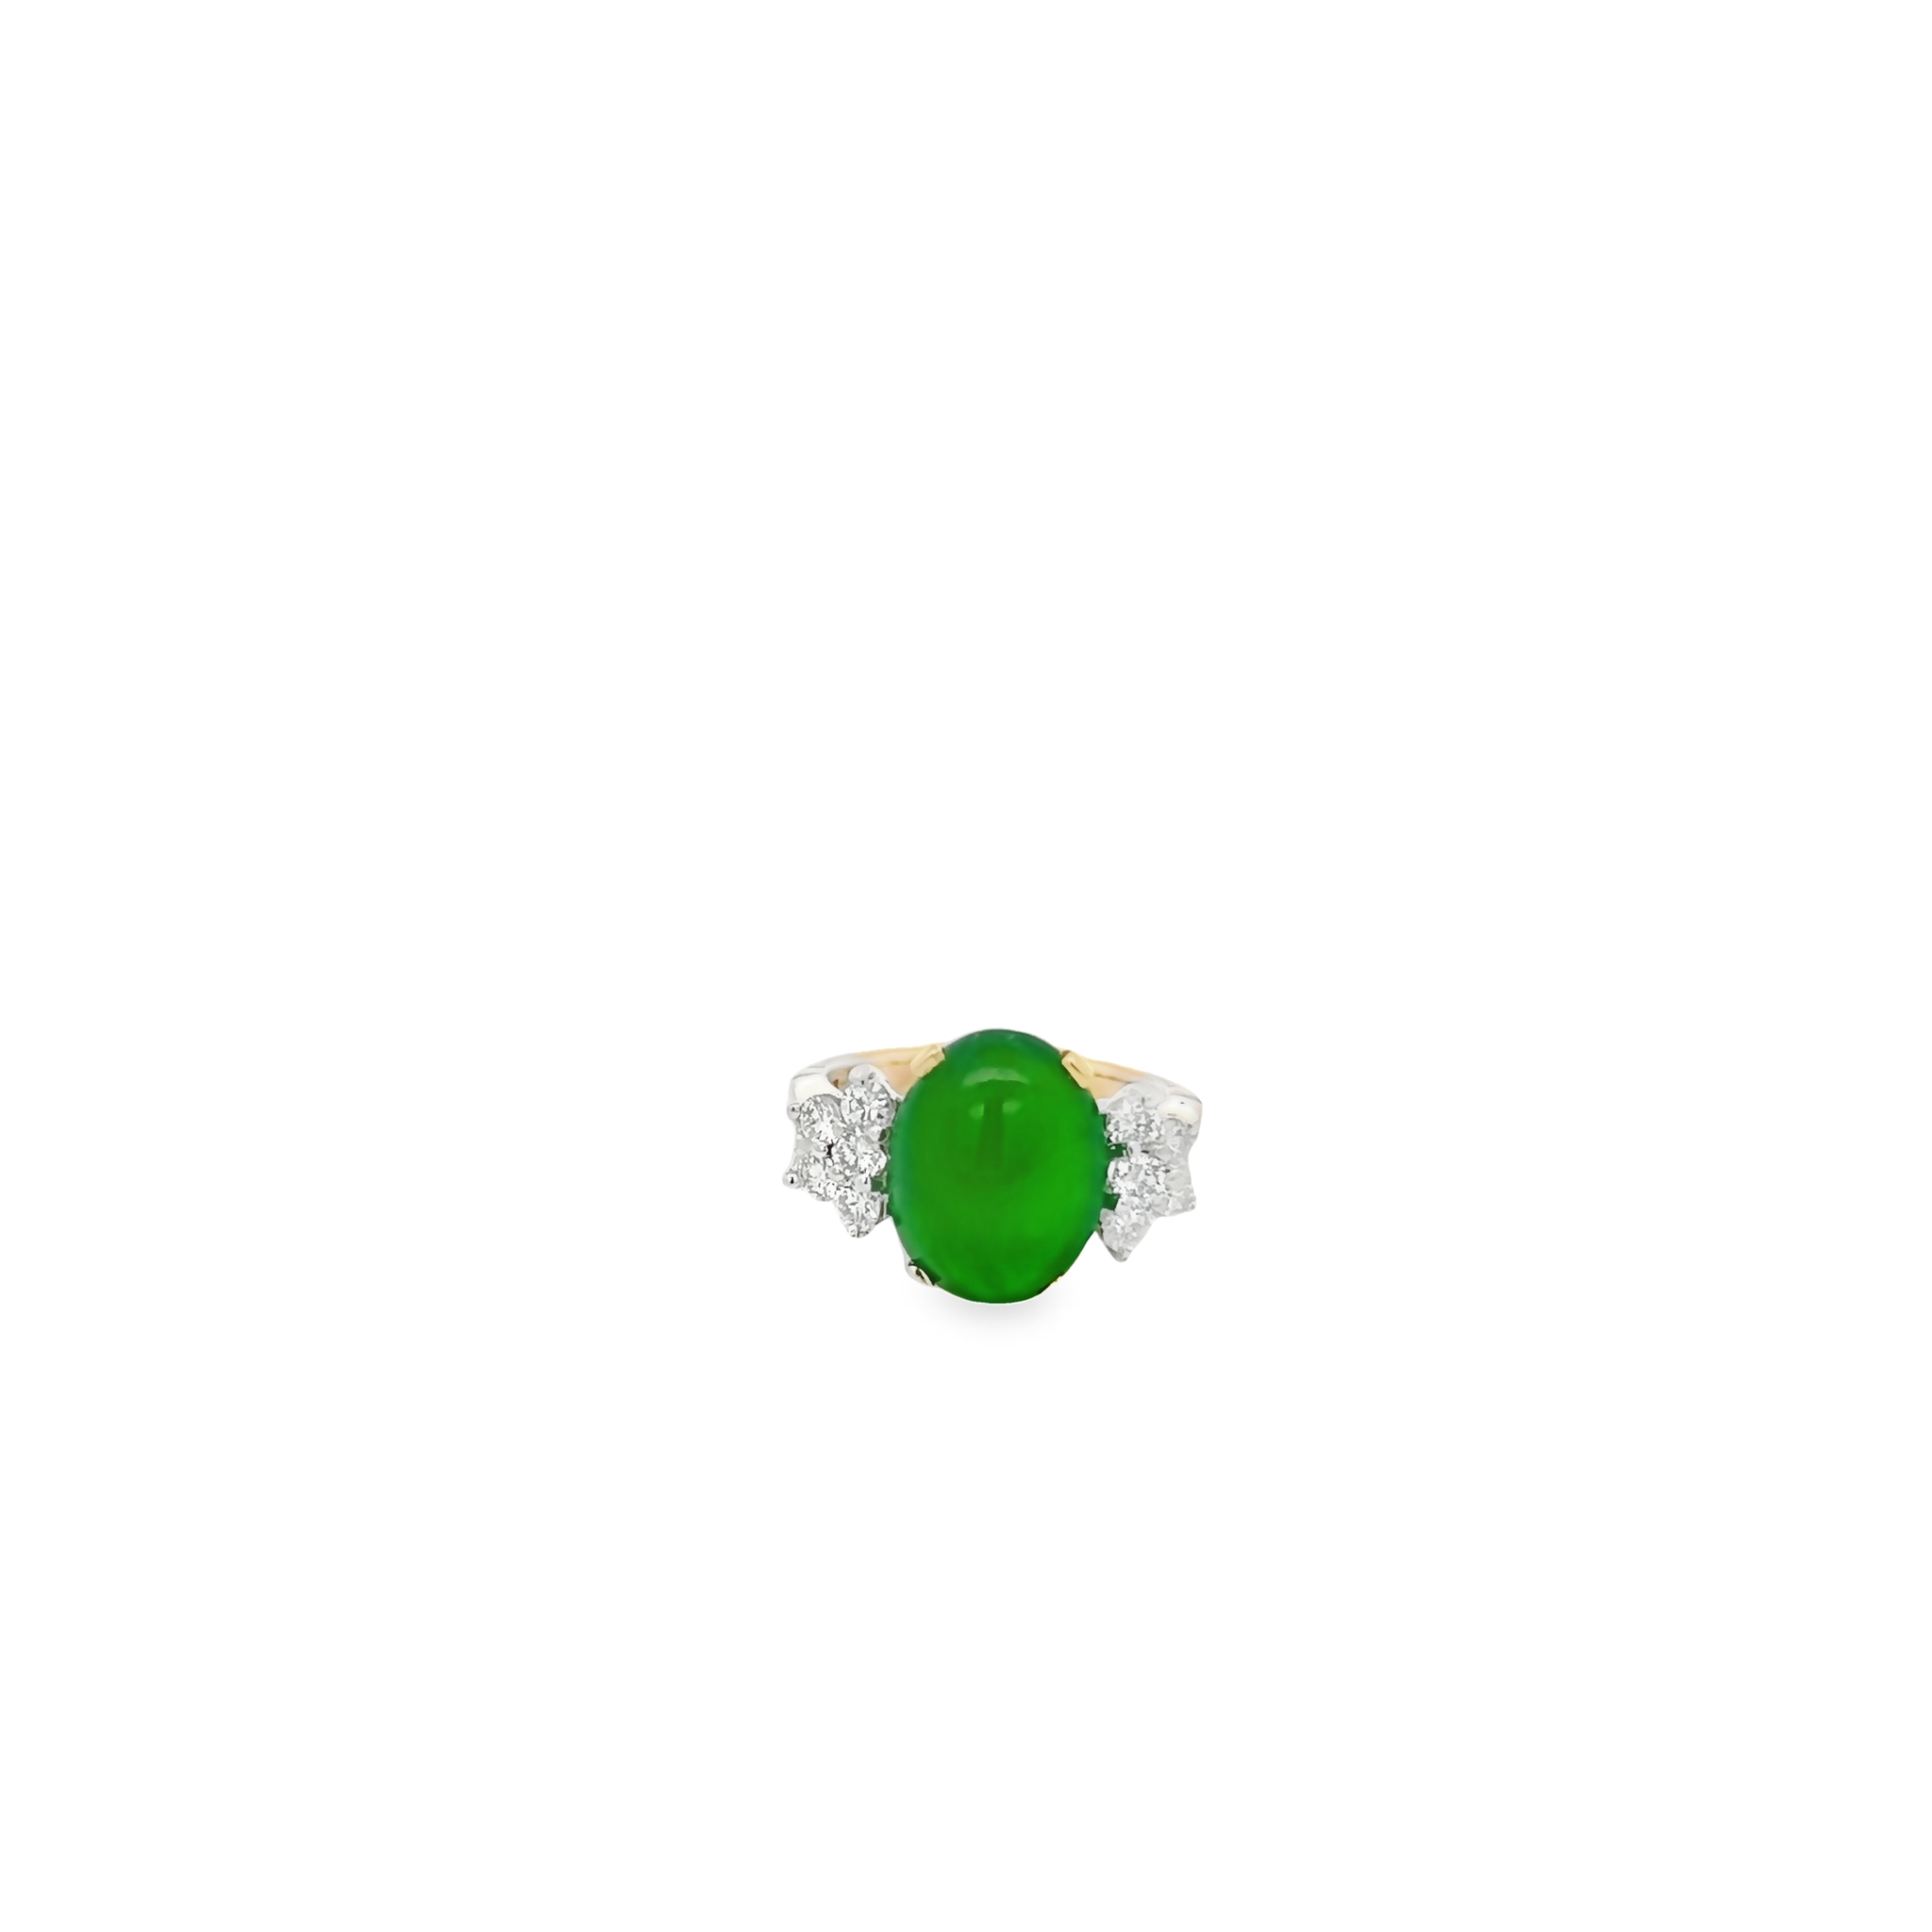 14 Karat Ring With One 12.30x8.30 Mm Cabochon Jadeite And 10=0.50tw Round Brilliant F Si Diamonds.
Fingermate Adjustabke Shank Installed.